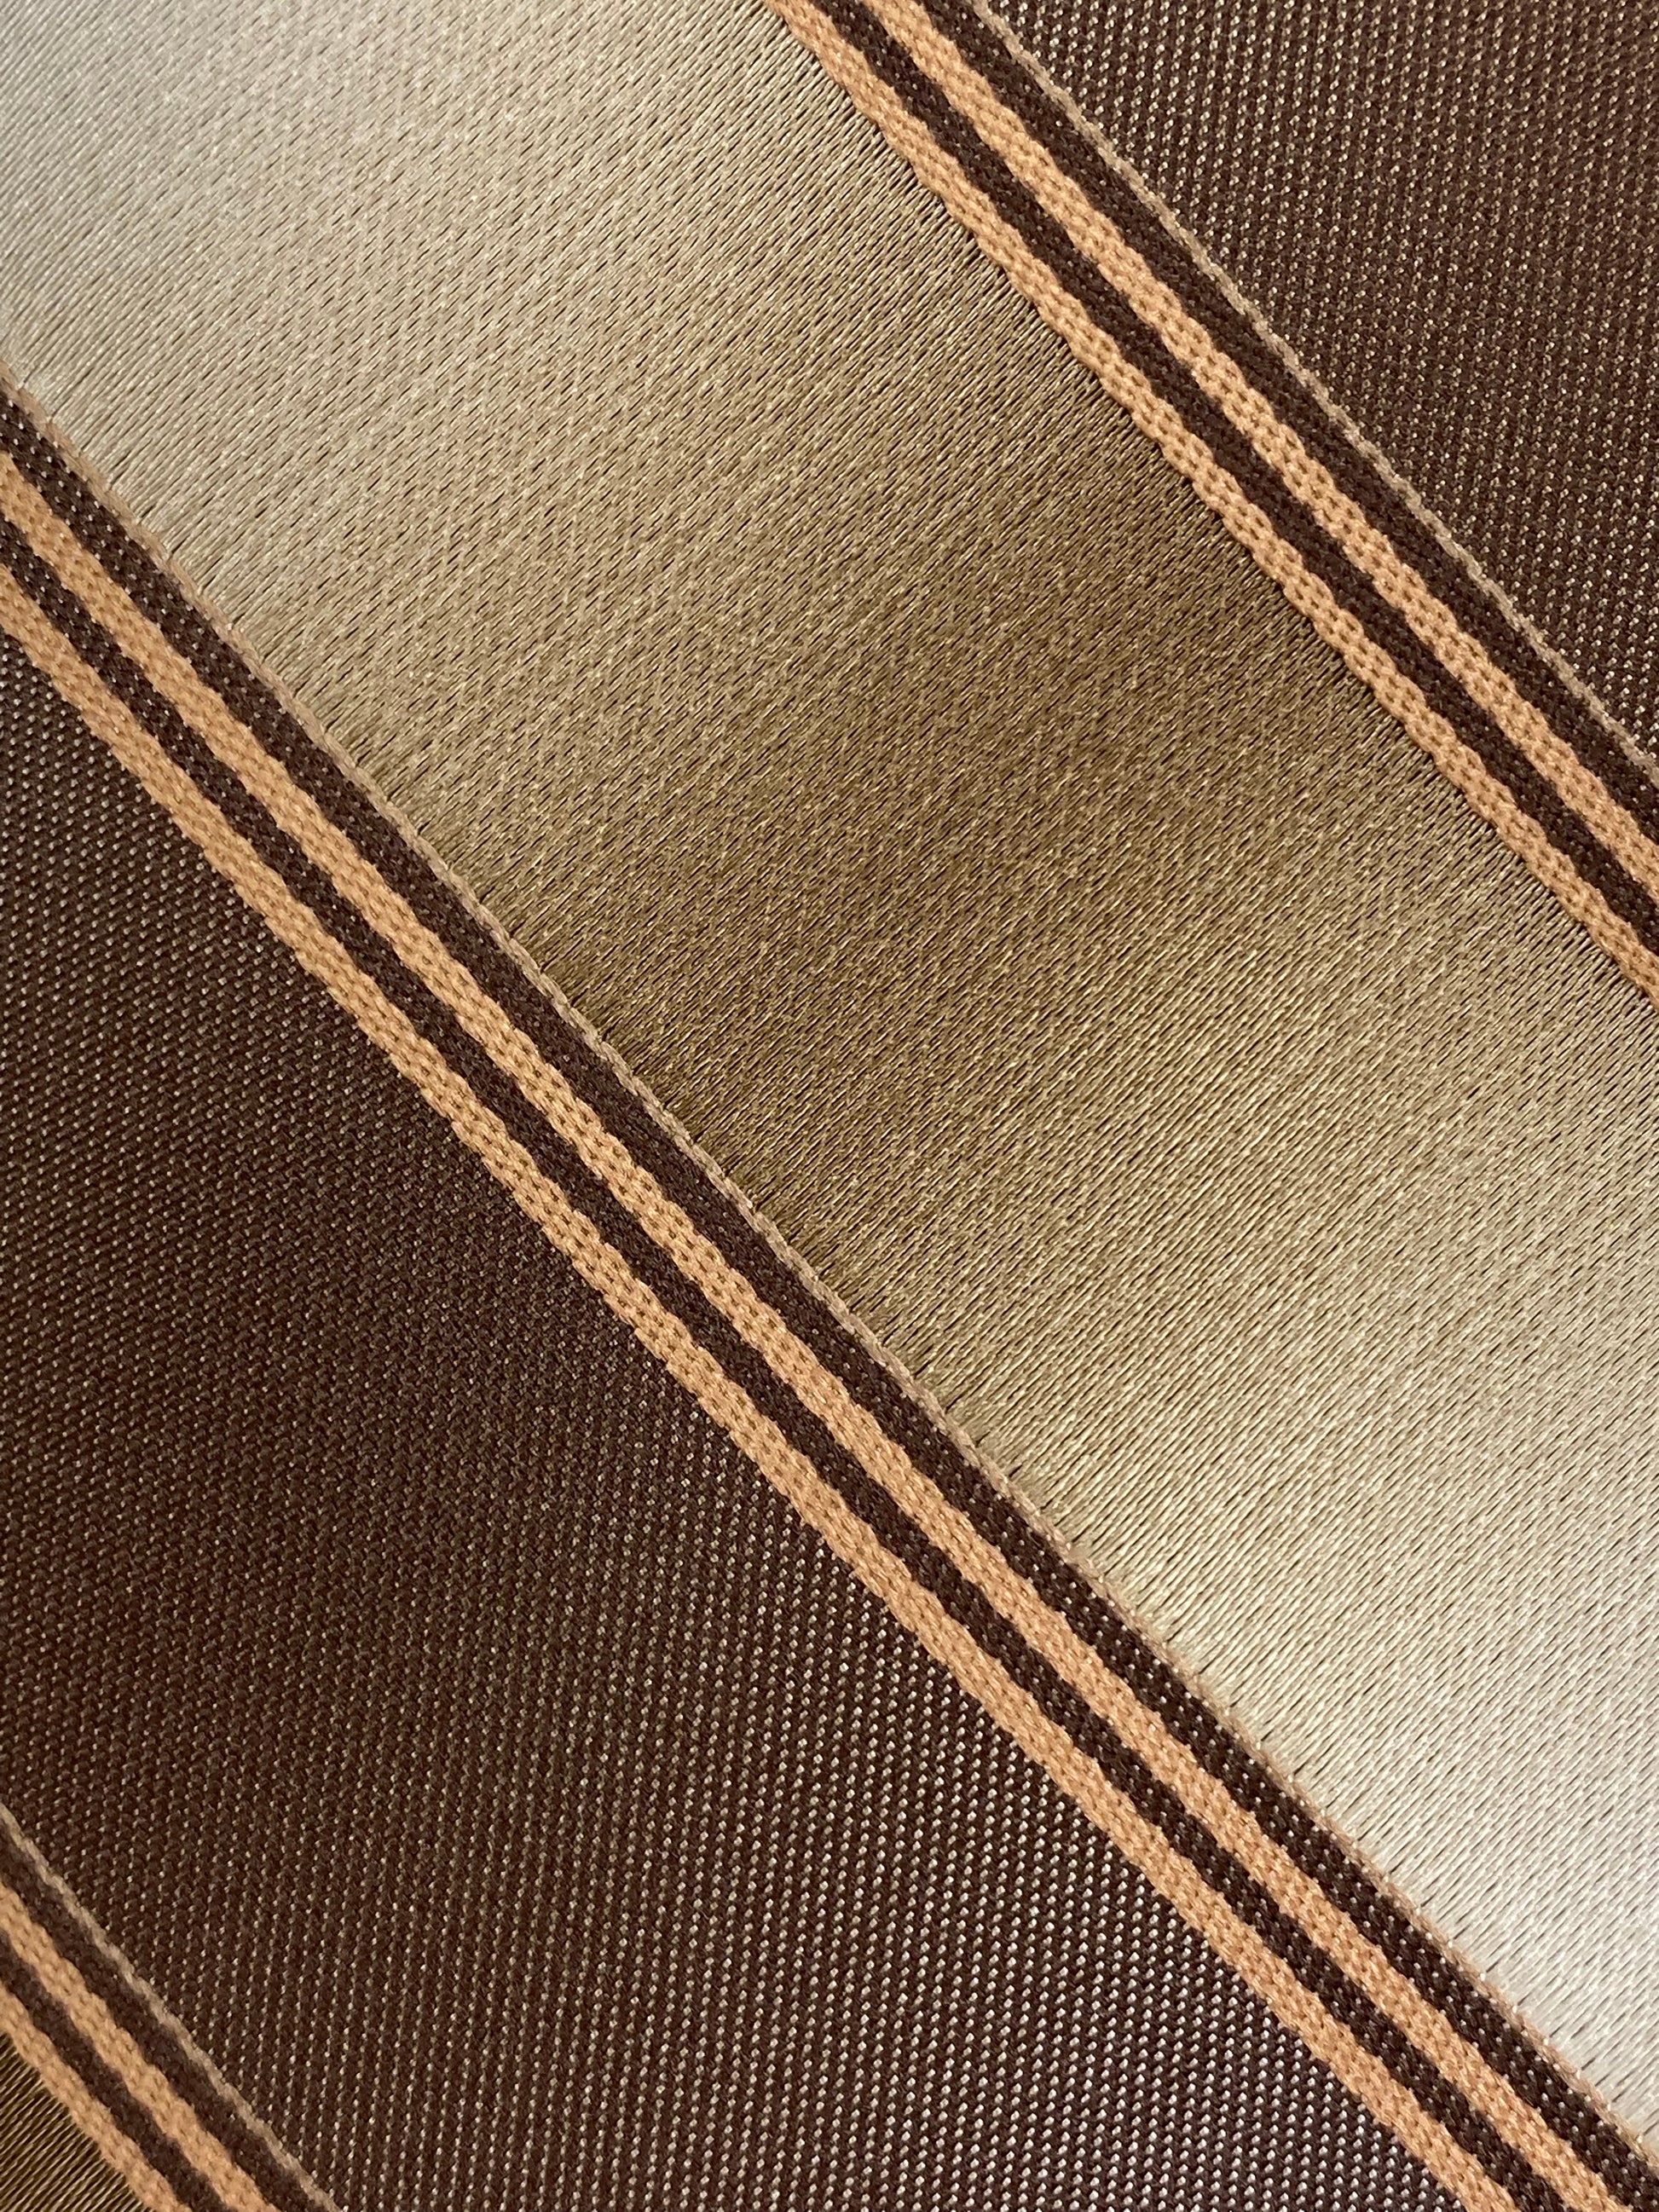 Close-up of: 80s Deadstock Necktie, Men's Vintage Brown Diagonal Stripe Tie, NOS